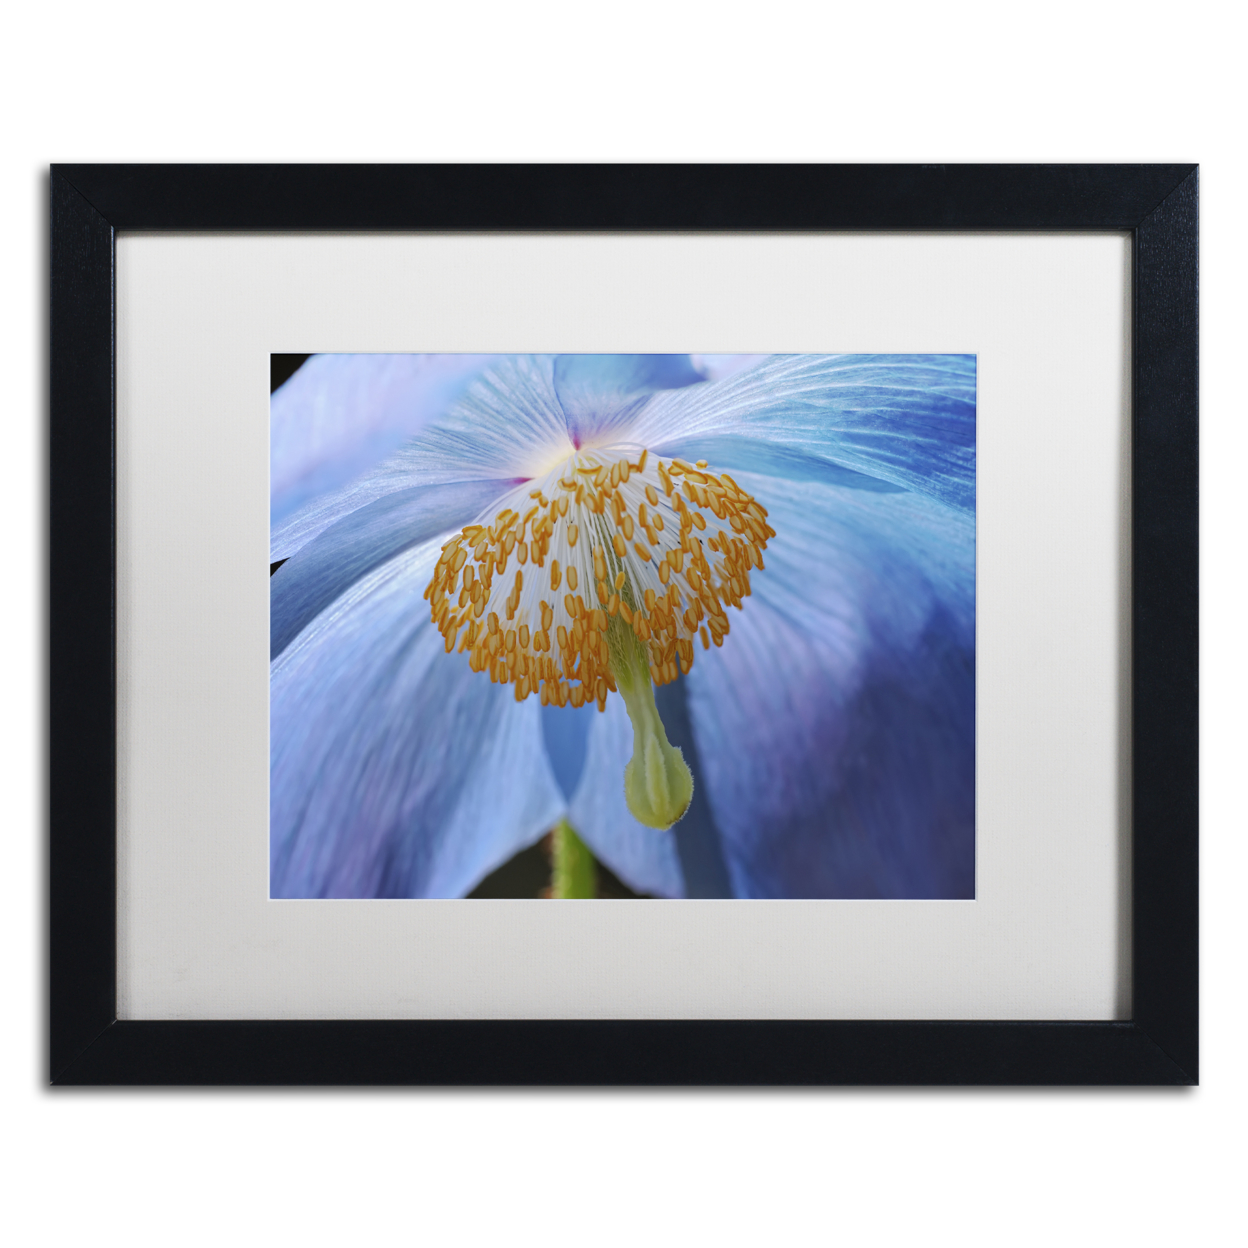 Cora Niele 'Blue Poppy' Black Wooden Framed Art 18 X 22 Inches